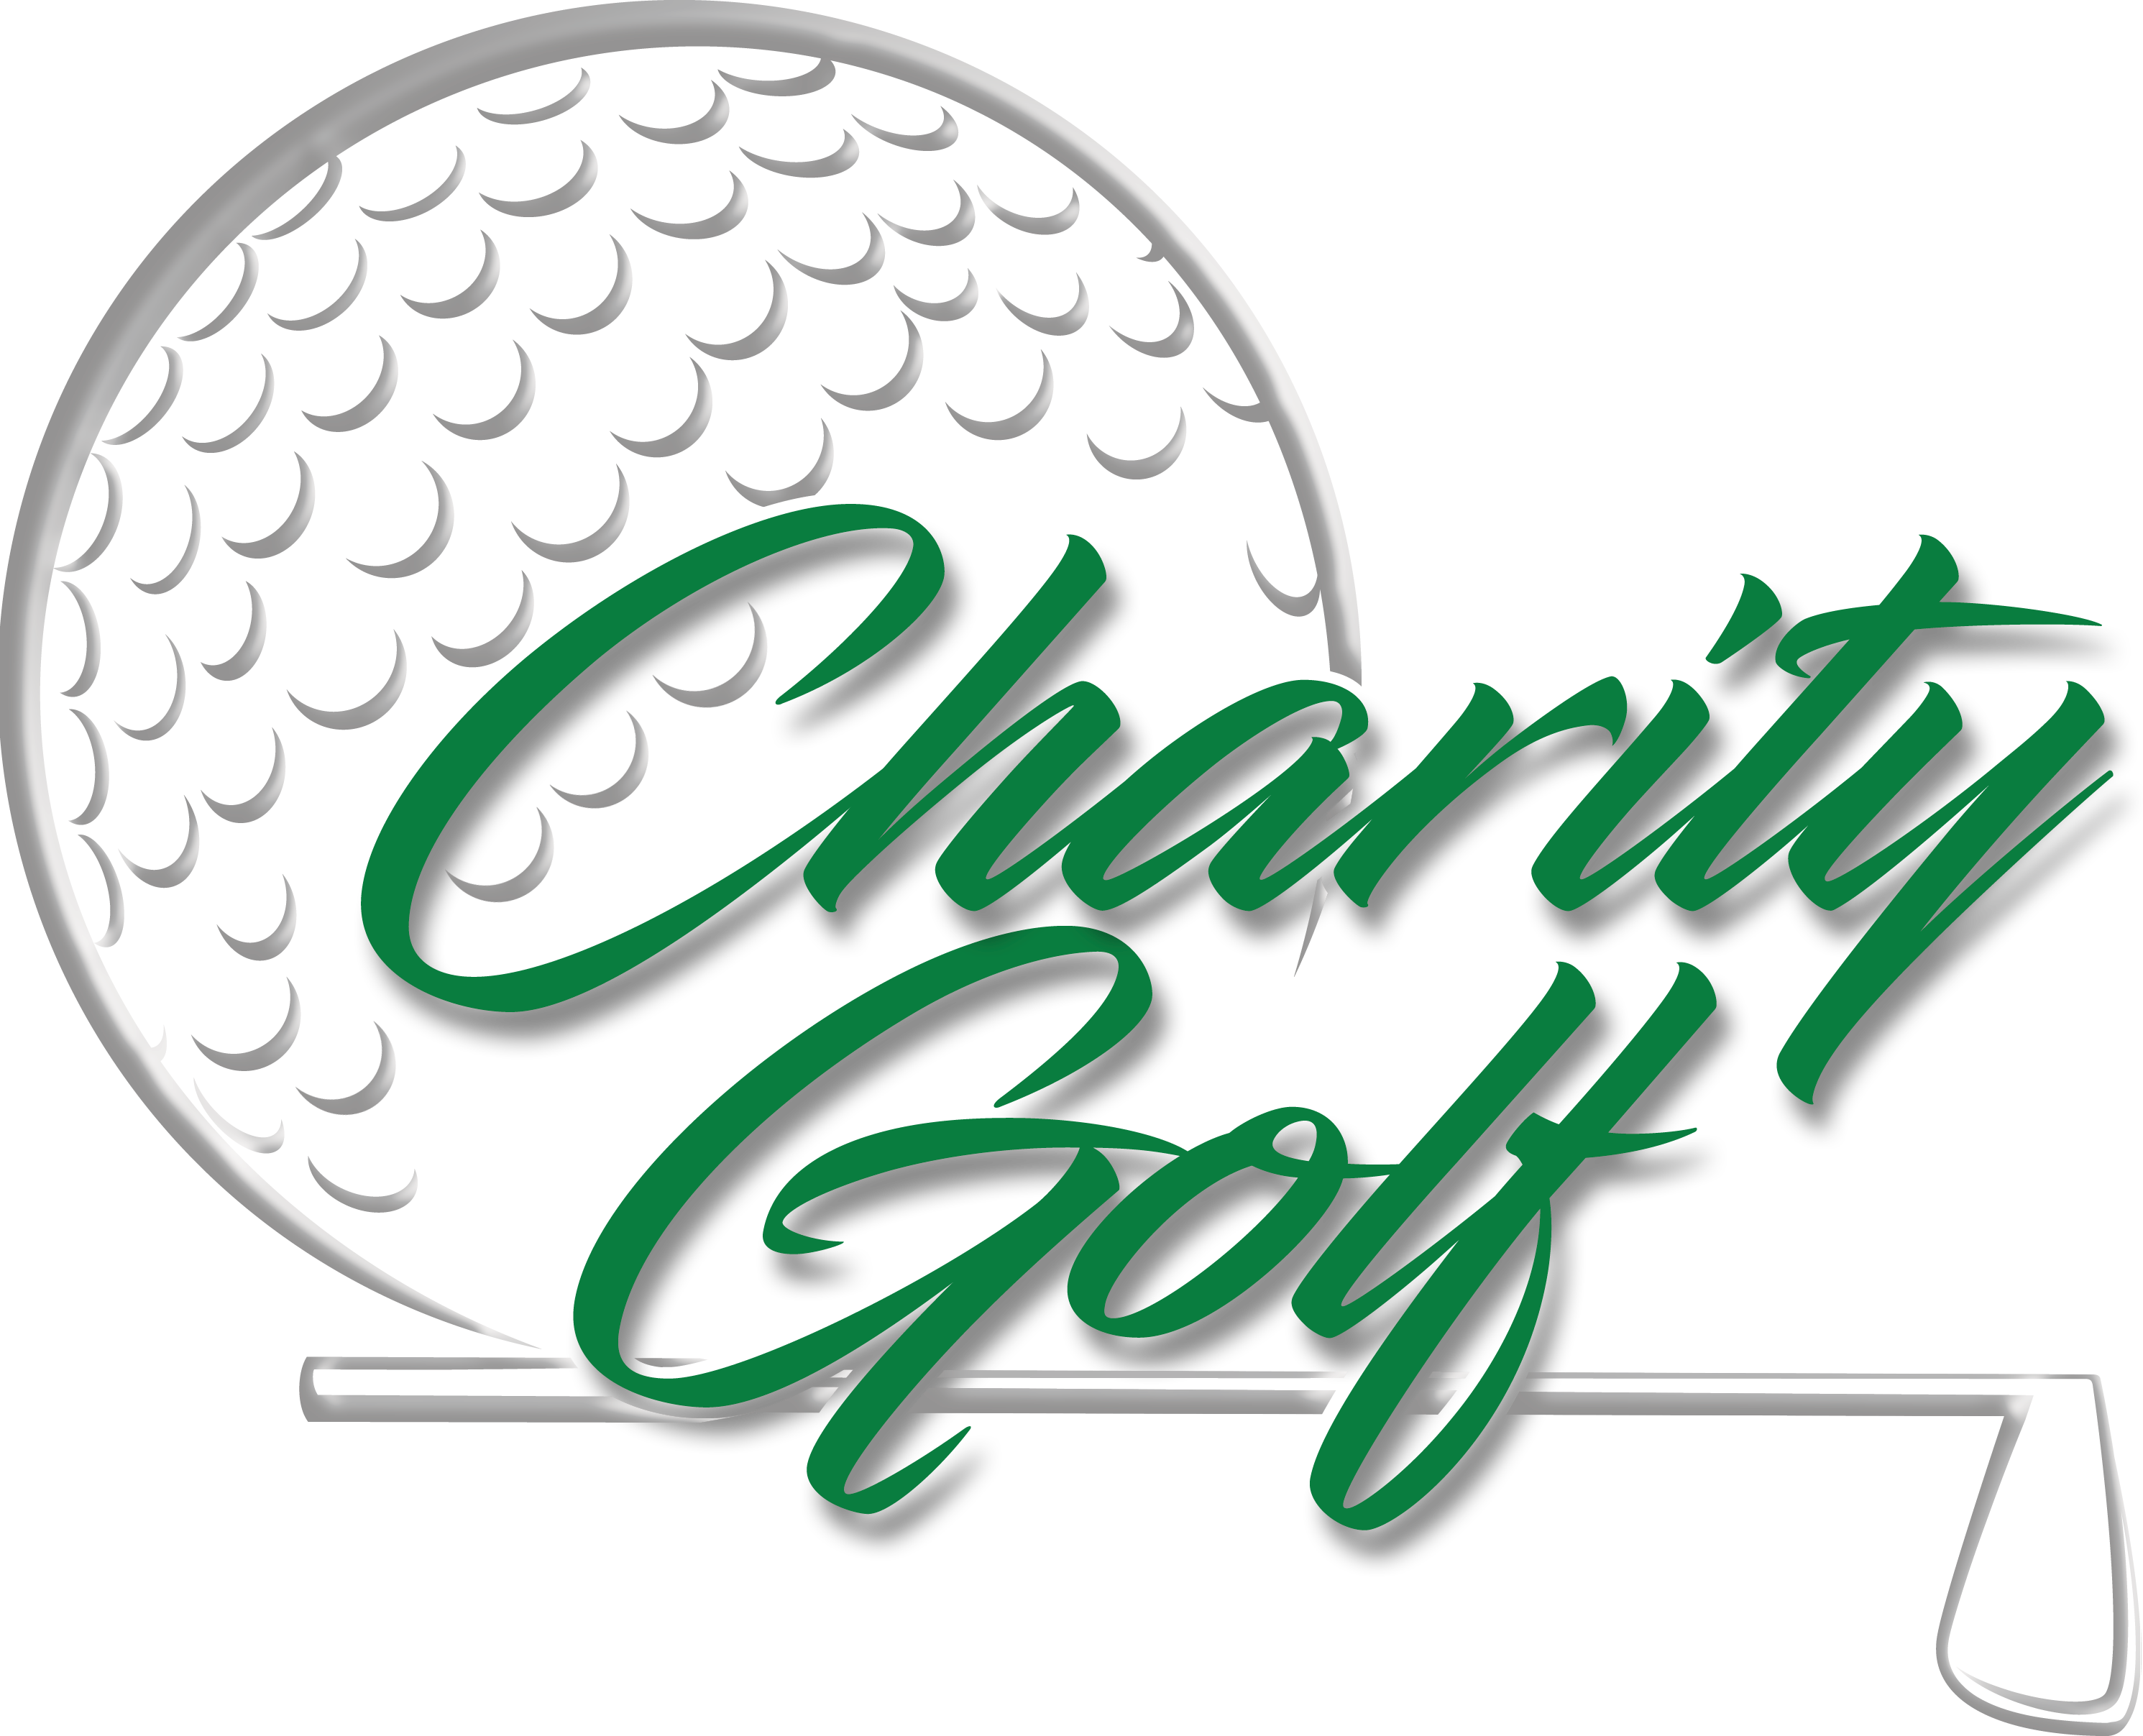 3rd Annual Charity Golf Tournament